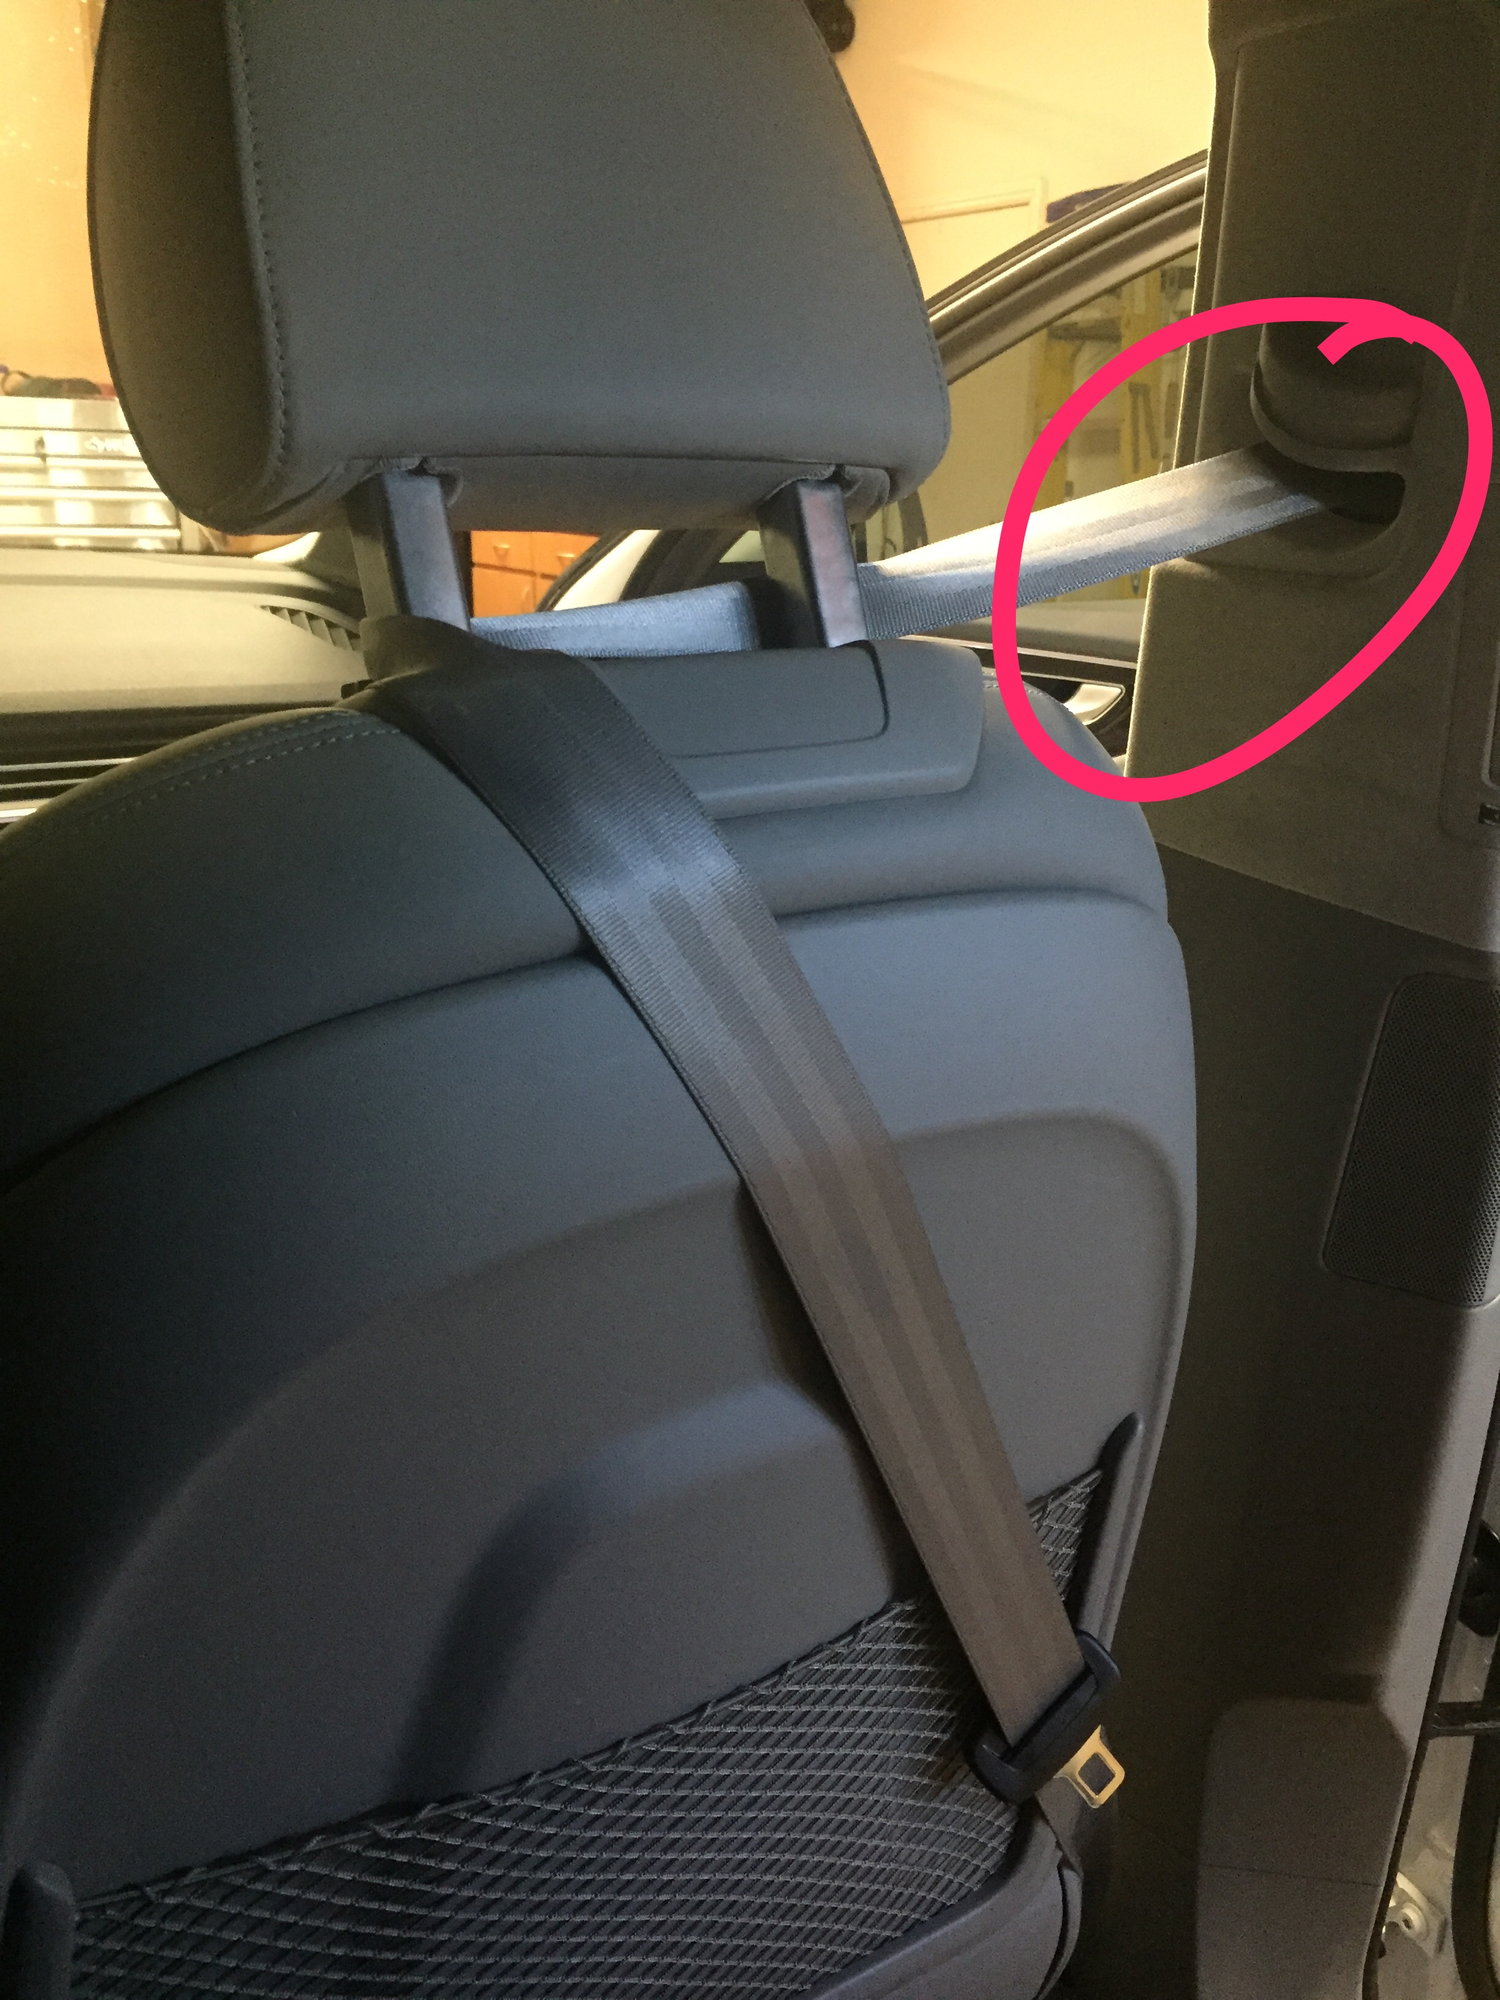 Passenger seat belt locked - AudiWorld Forums